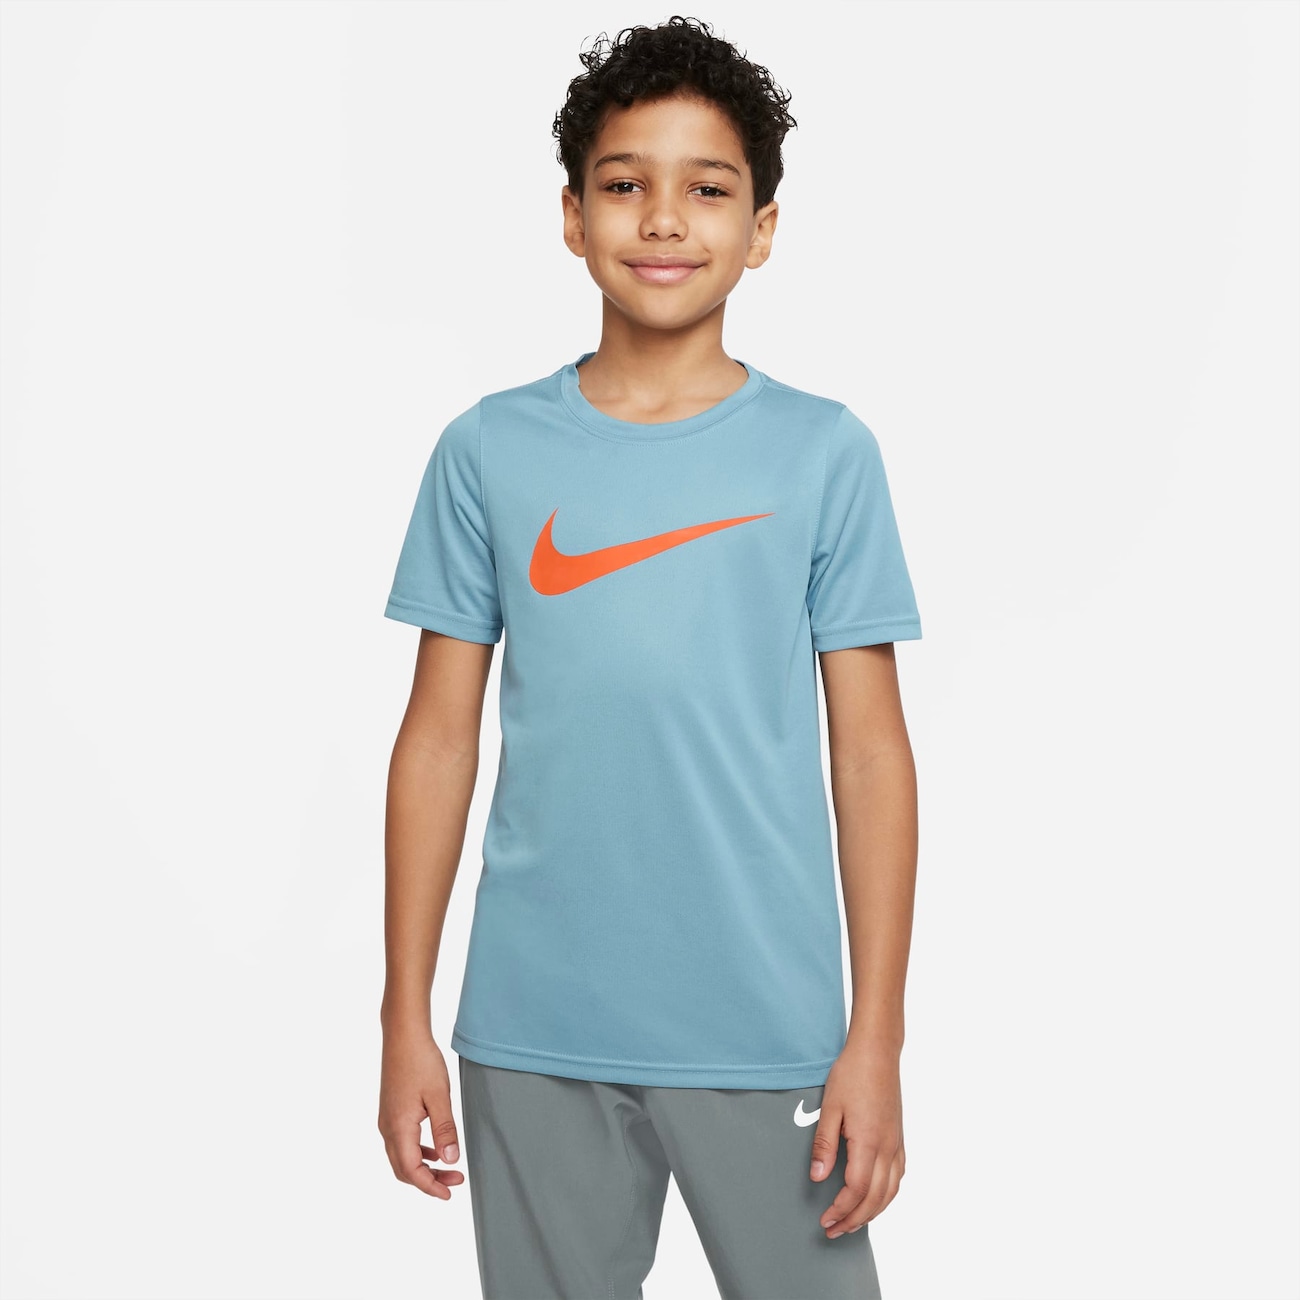 Camiseta Nike Dri-FIT Infantil - Foto 1